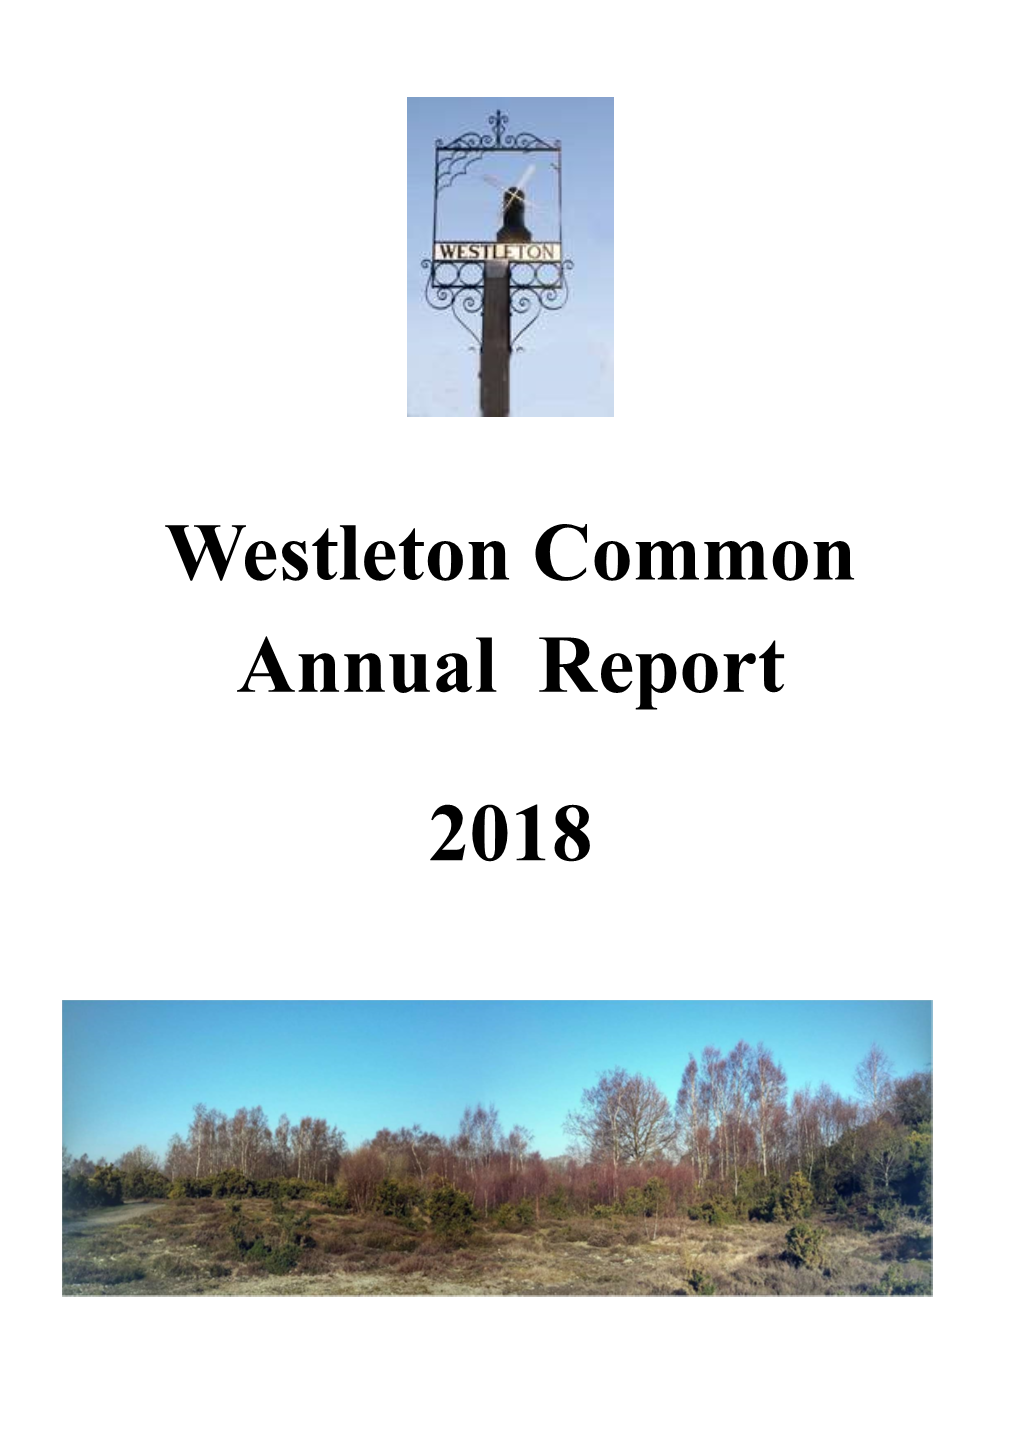 Westleton Common Annual Report 2018